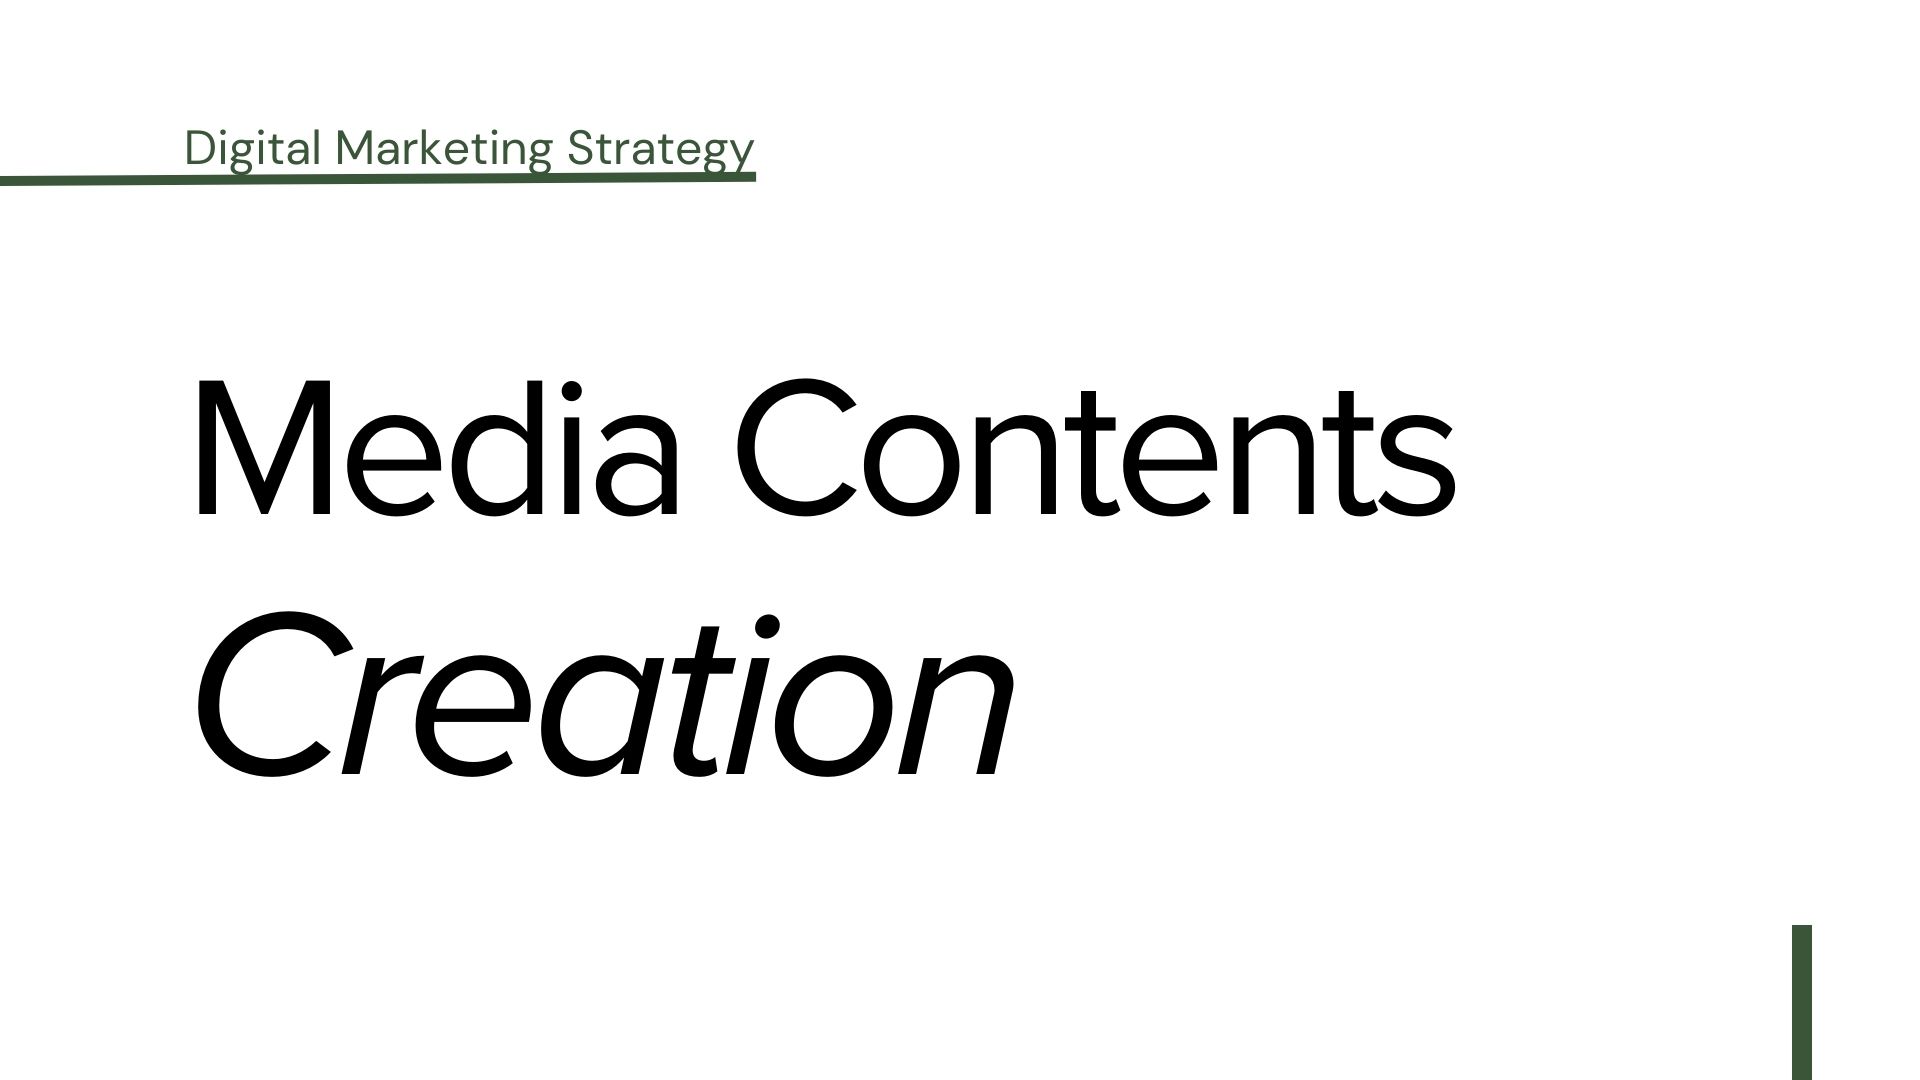 Digital Marketing Strategy: Media Contents Creation